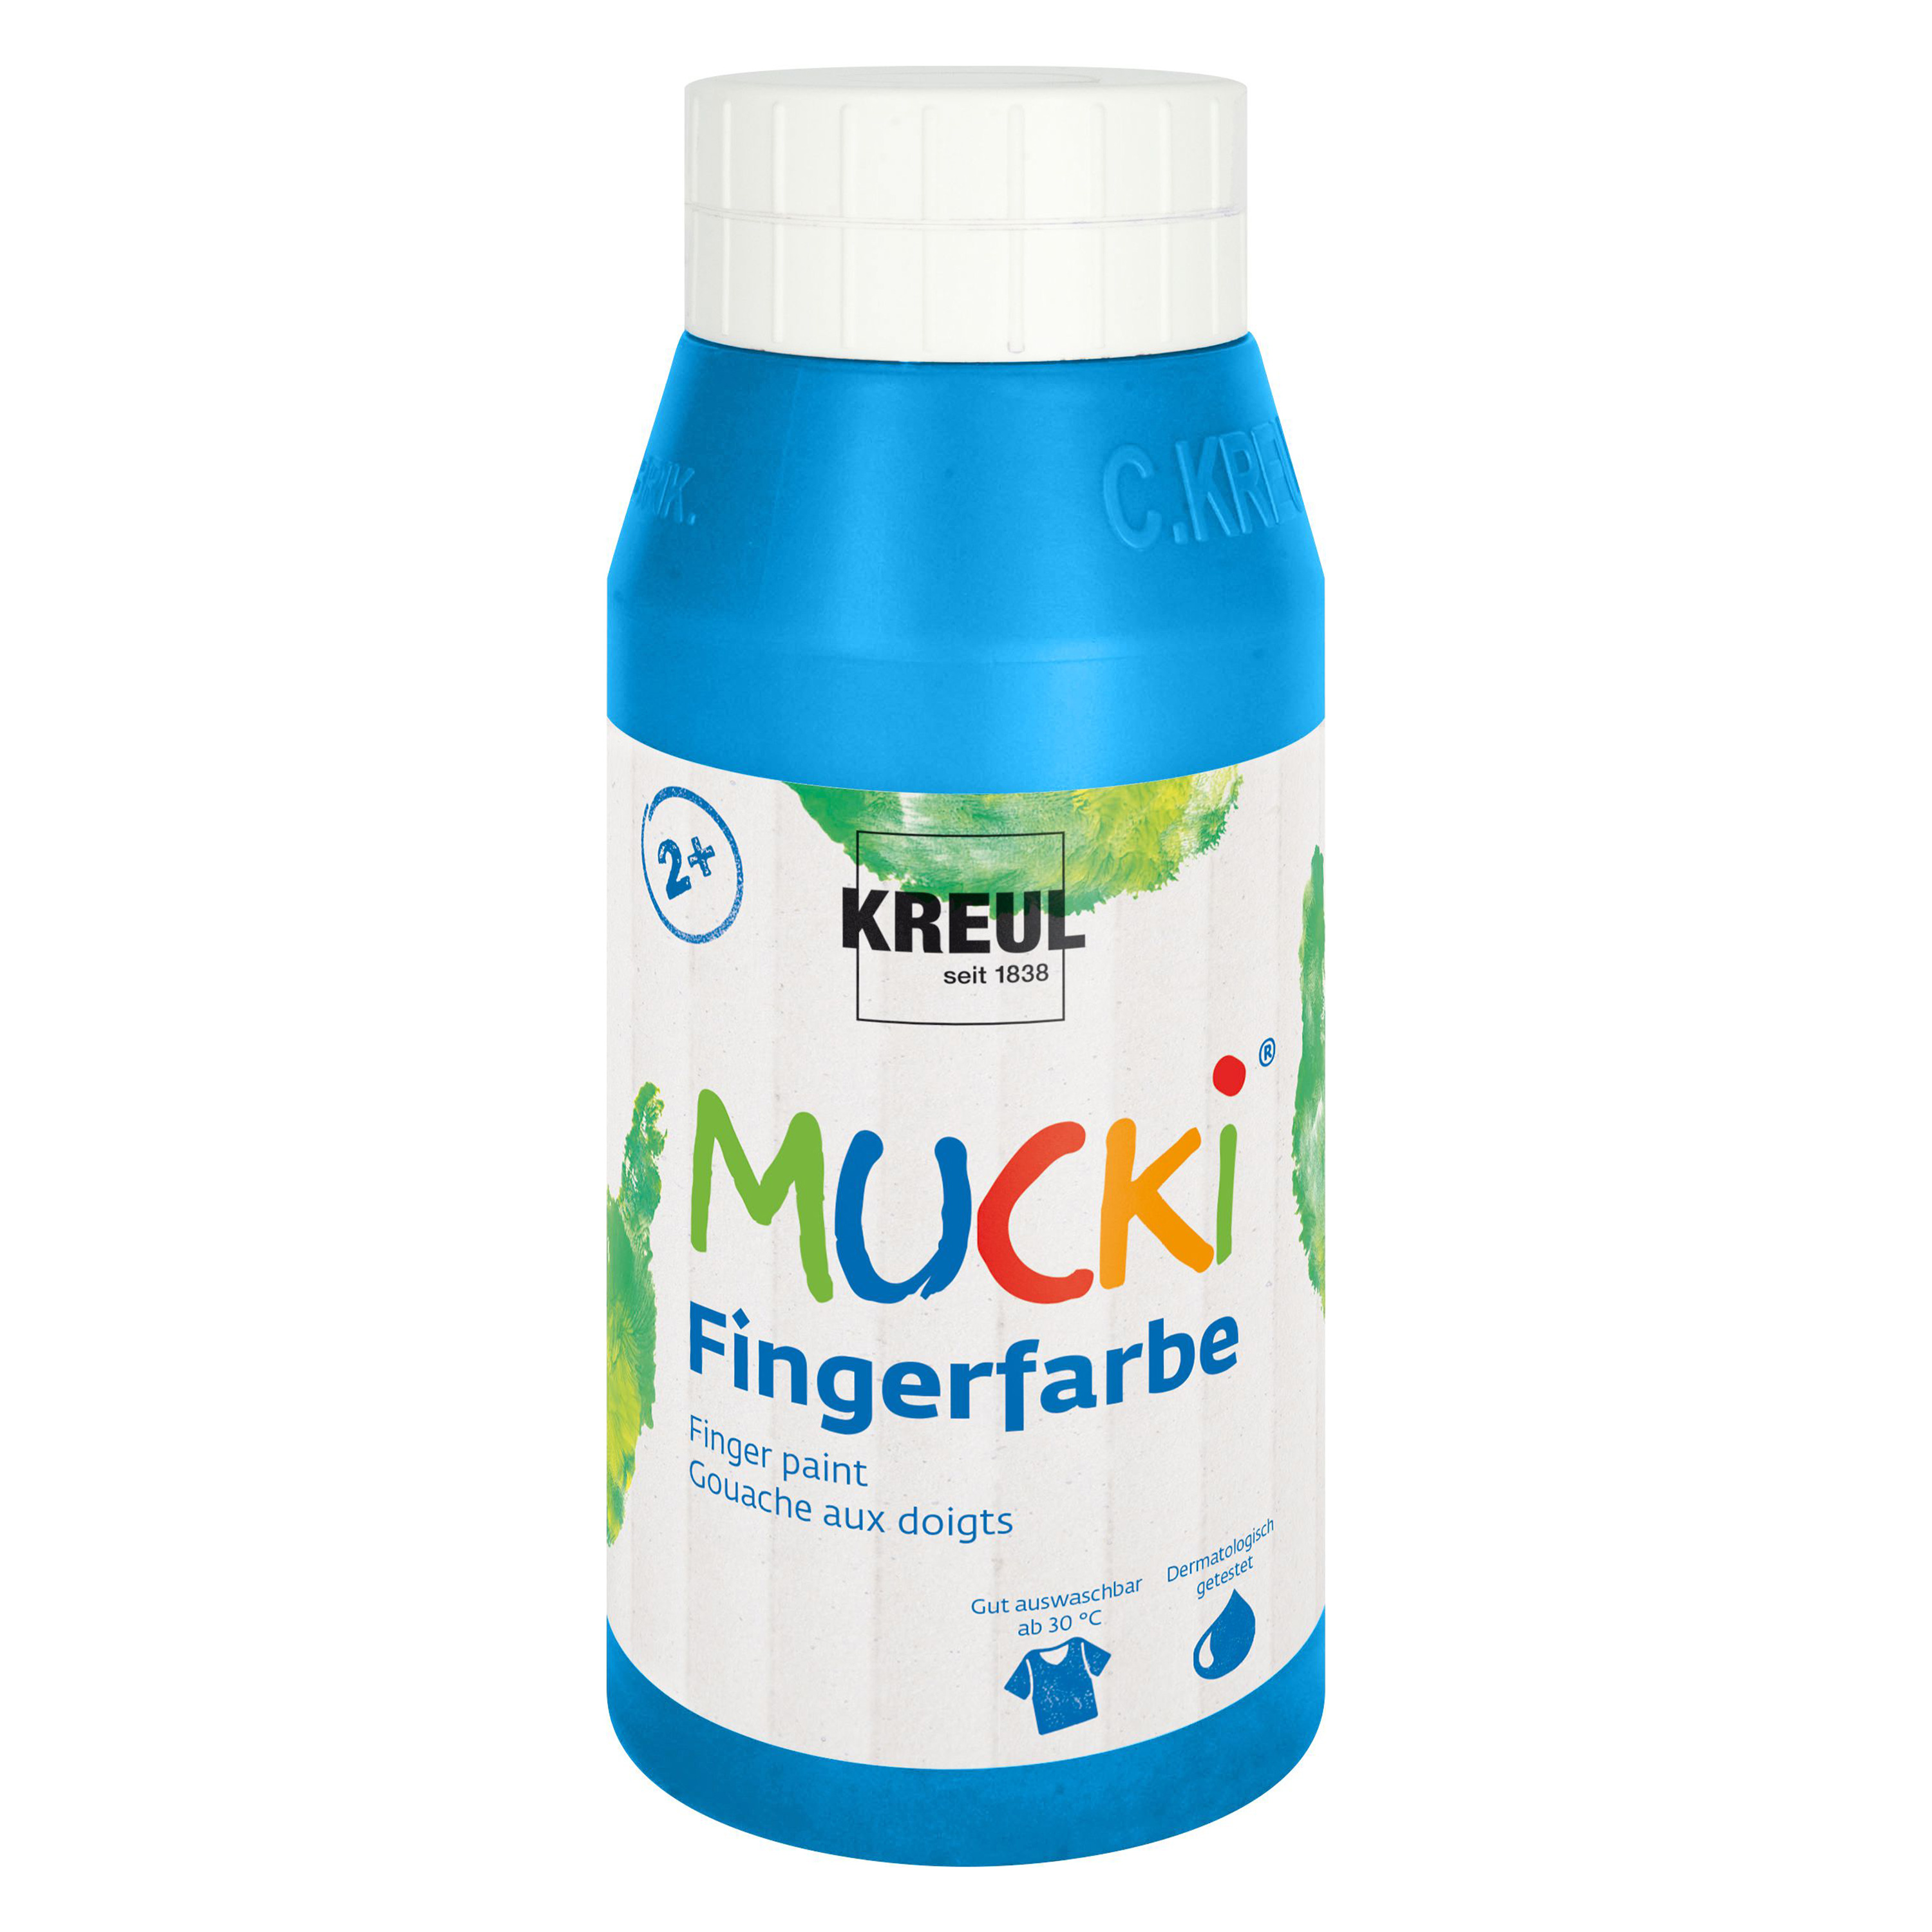 MUCKI Fingerfarbe, 750 ml, blau